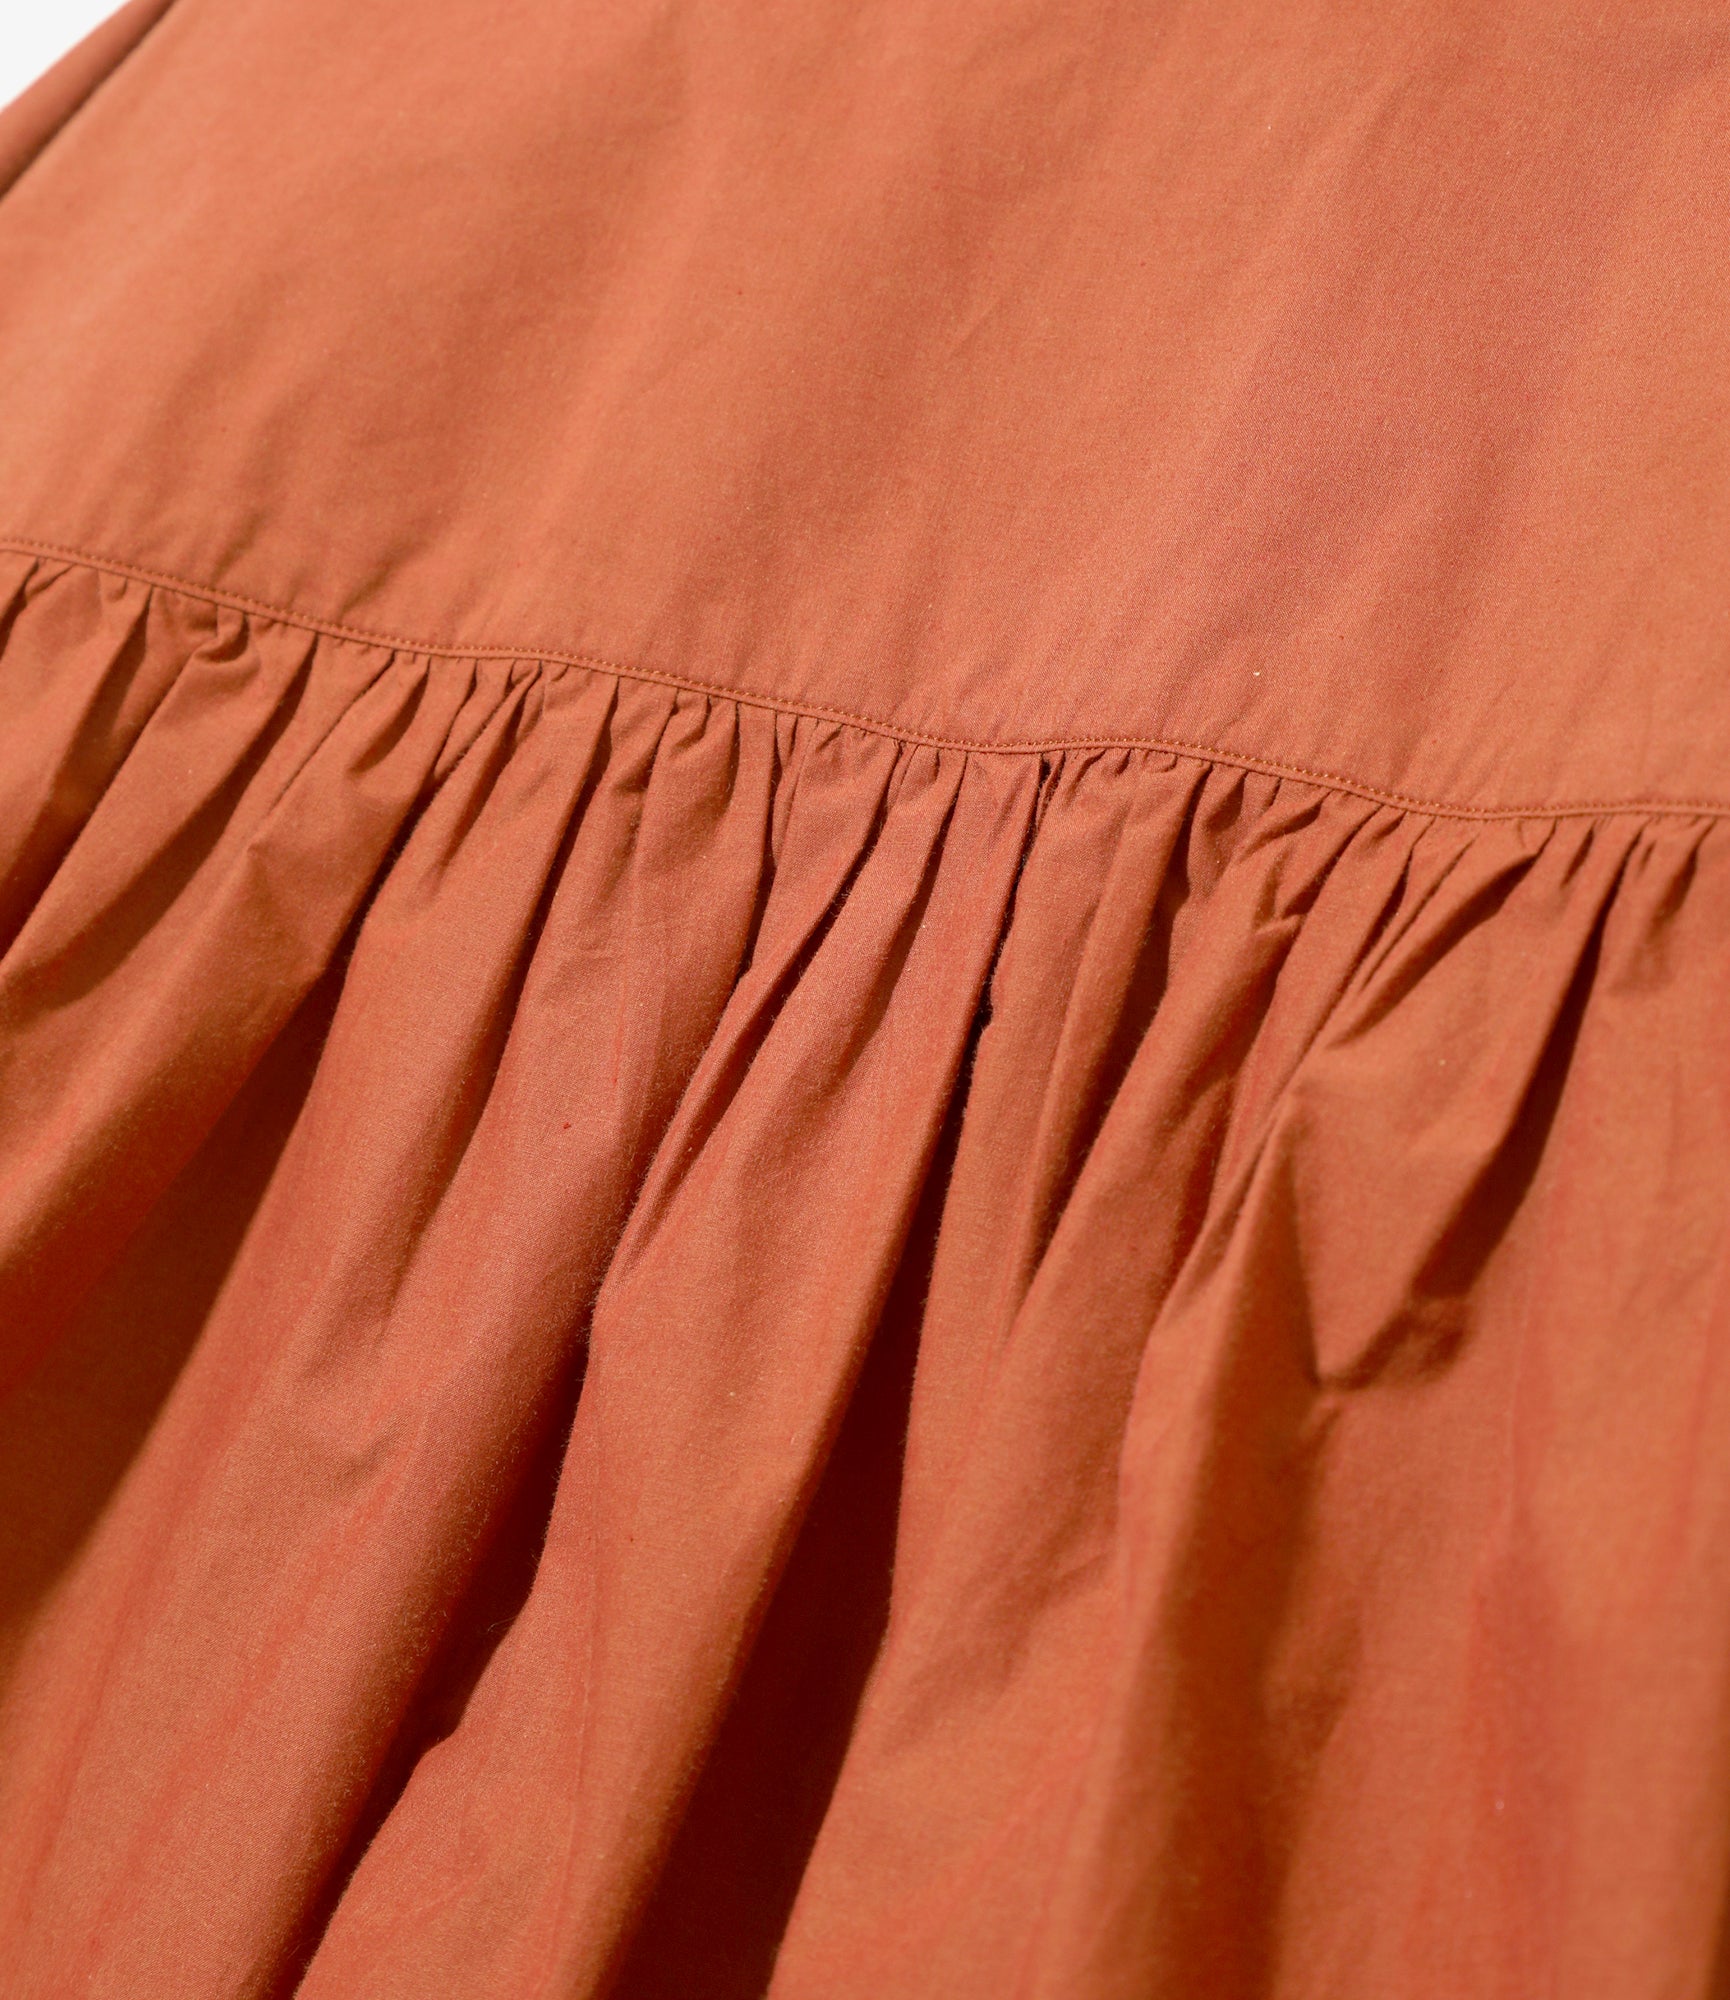 Painter Shirt - Orange - Cotton Cloth / Iridescent